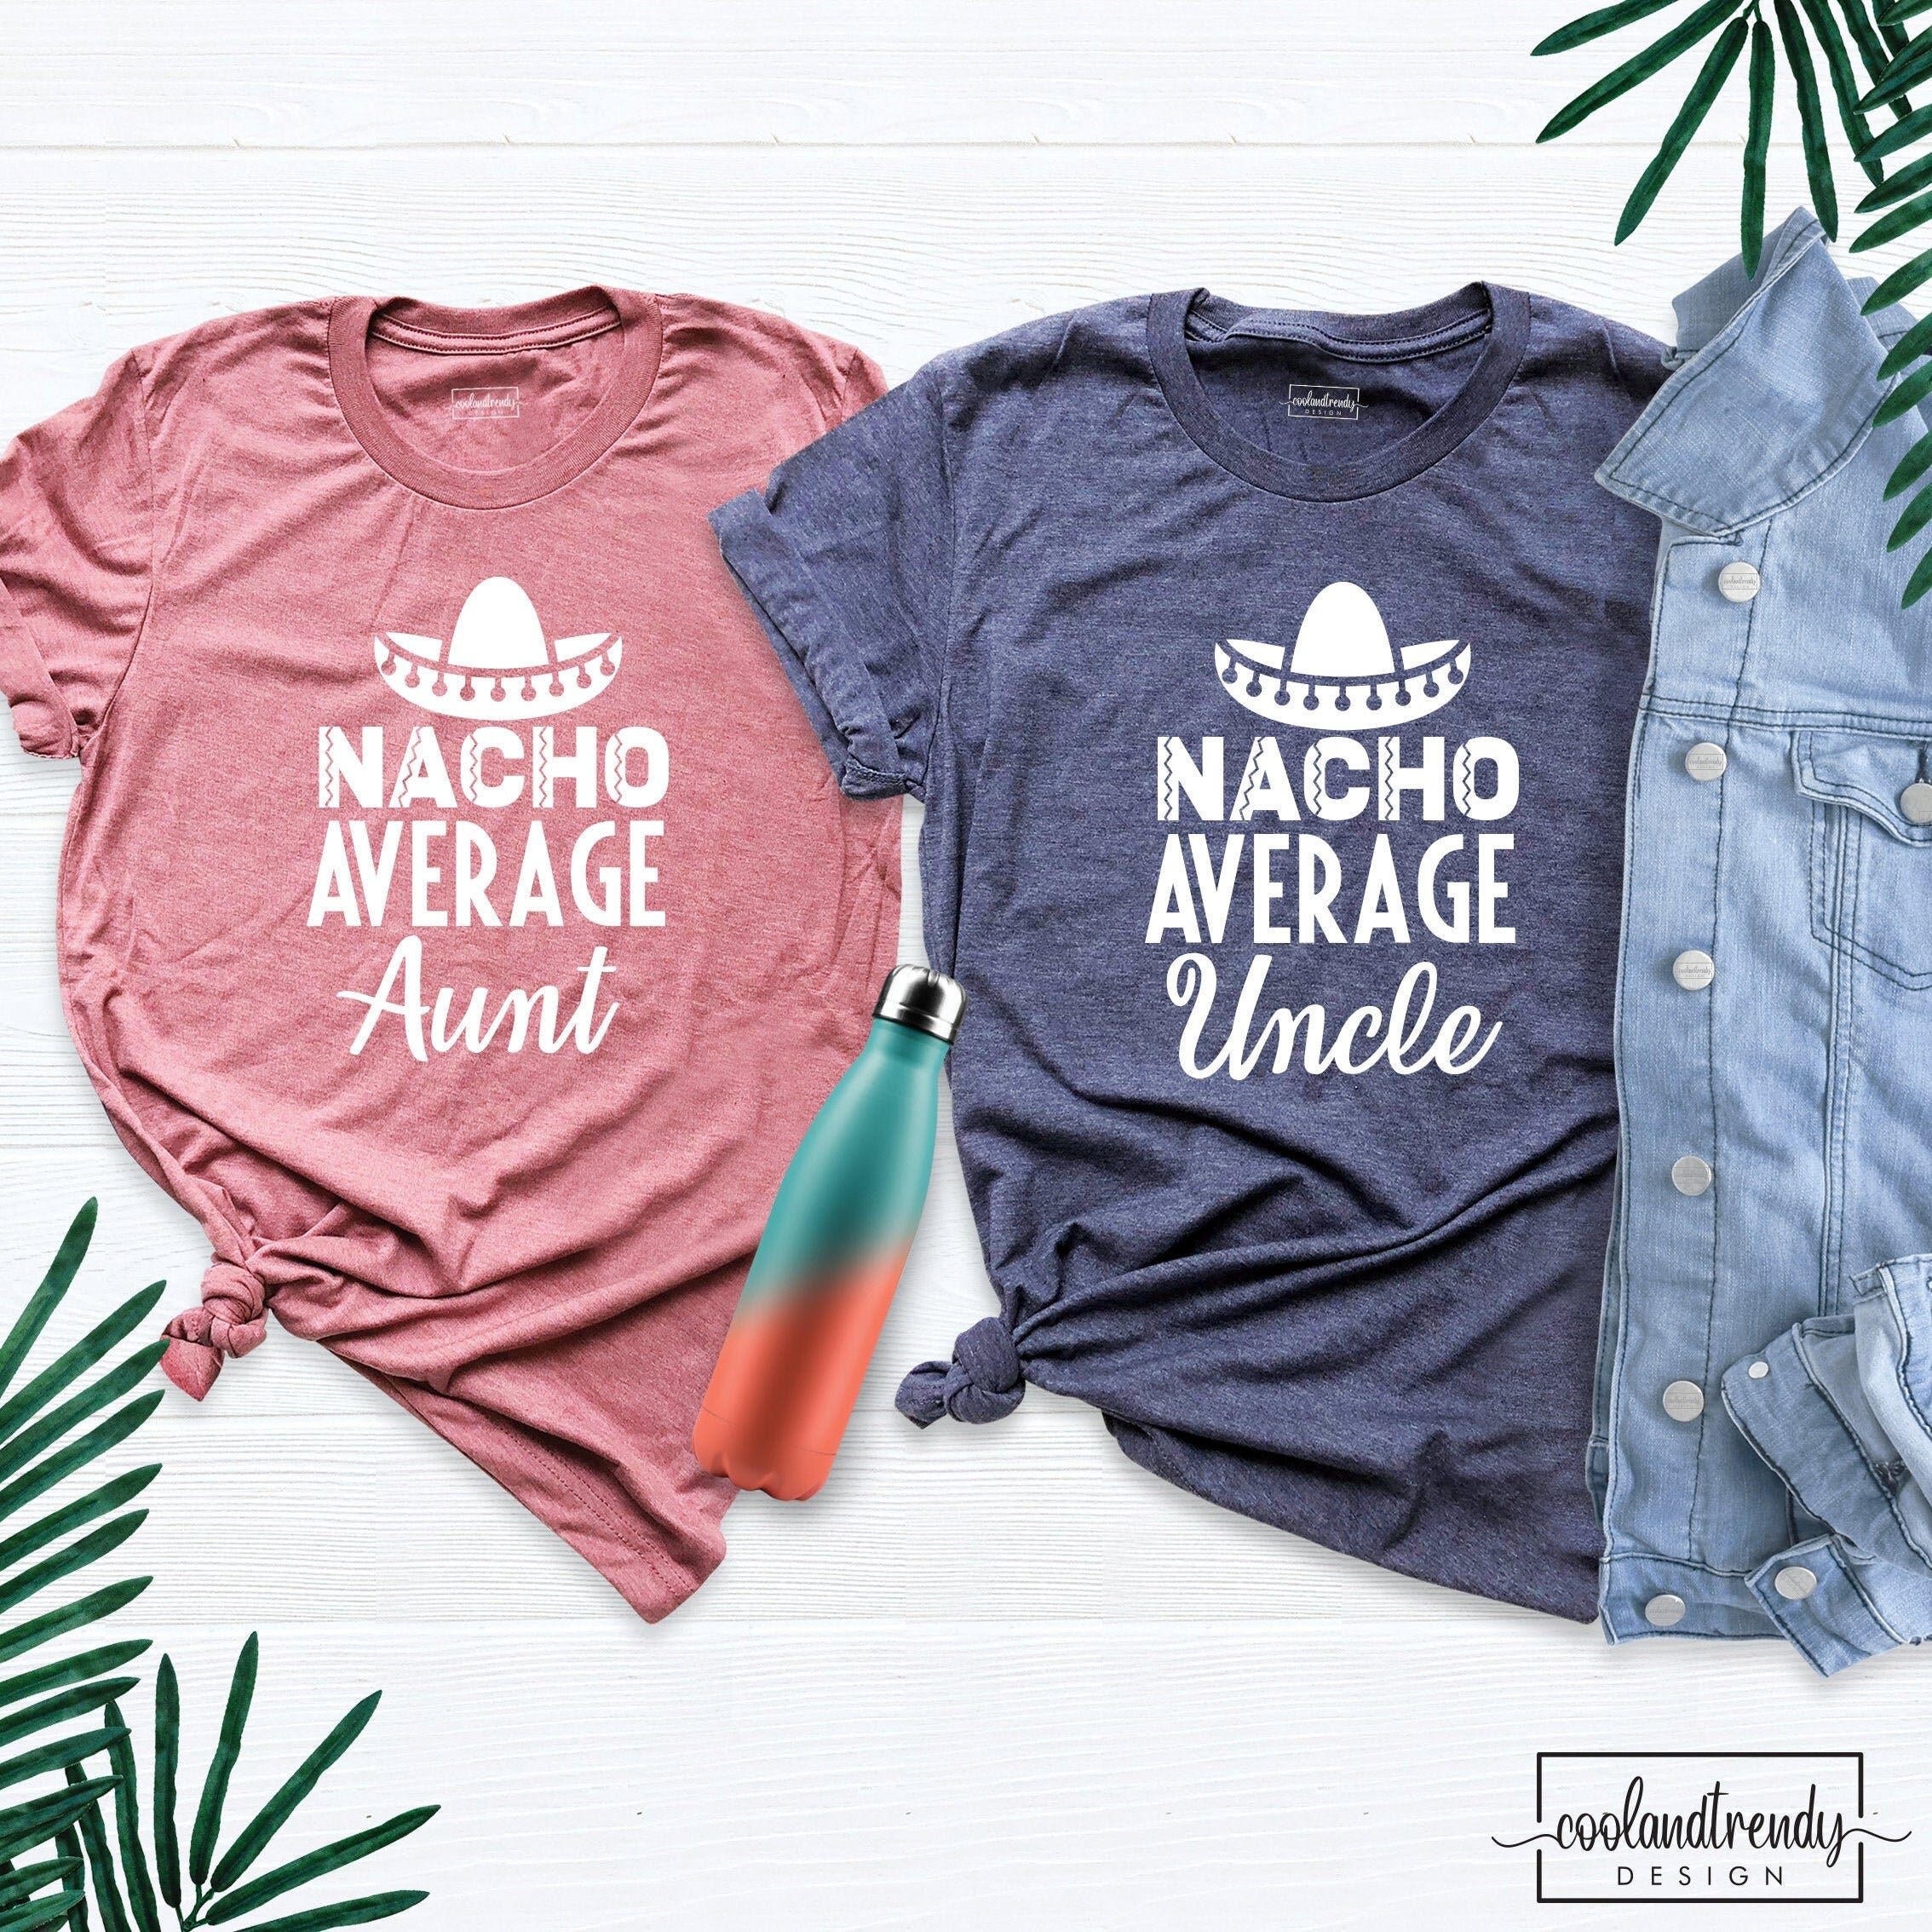 Nacho Average Aunt Shirt, Nacho Average Uncle Shirt, Nacho Tuesday Party Shirt, Taco Food Night Shirt, Nacho Holiday Shirts, Valentine Gift